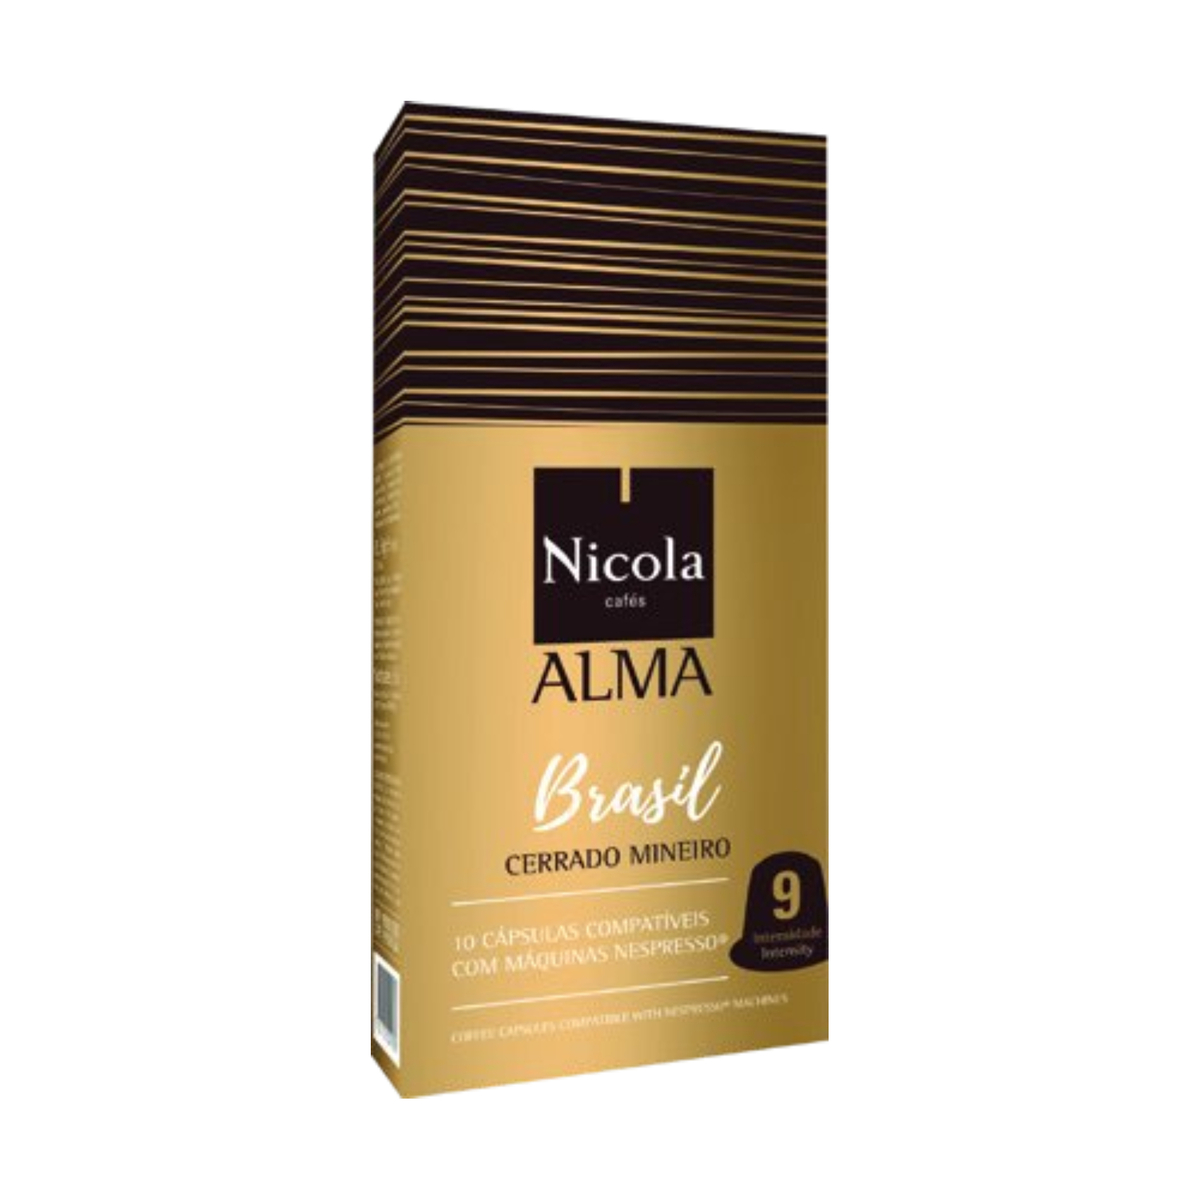 Nicola Alma Brasil Coffee 50 g